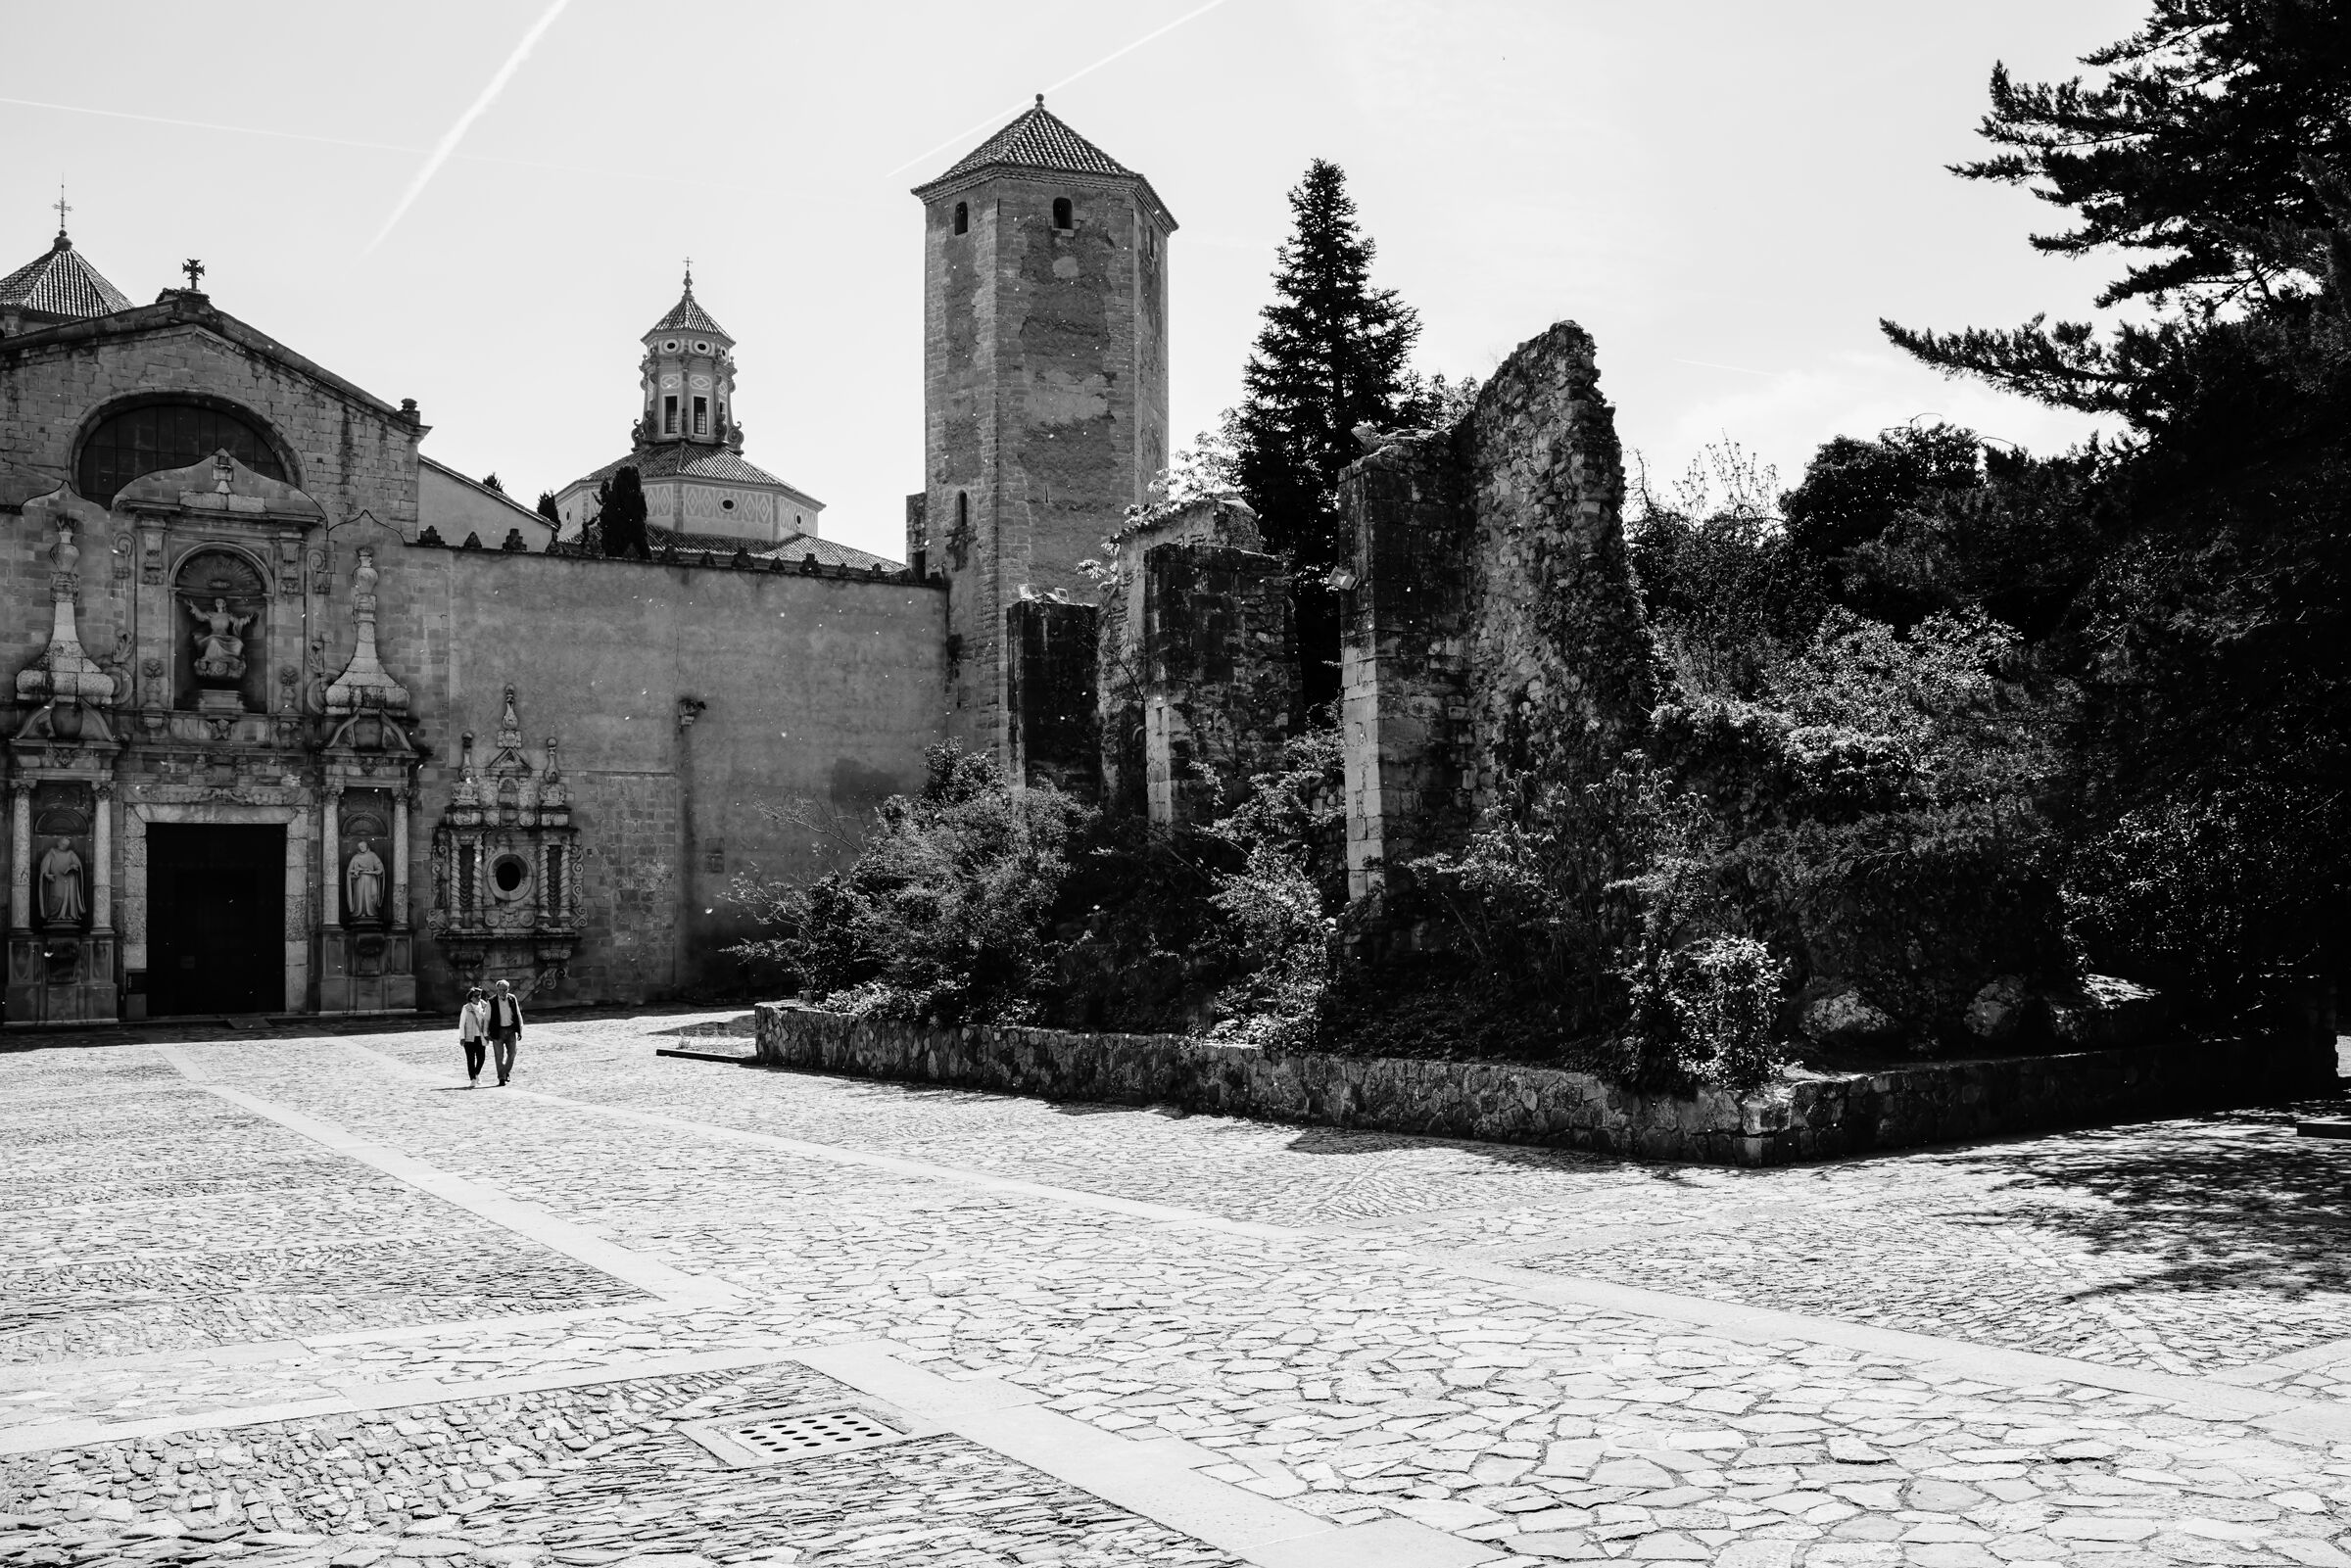 Monastero di Poblet(Spagna Catalogna, prv di Tarragona)...